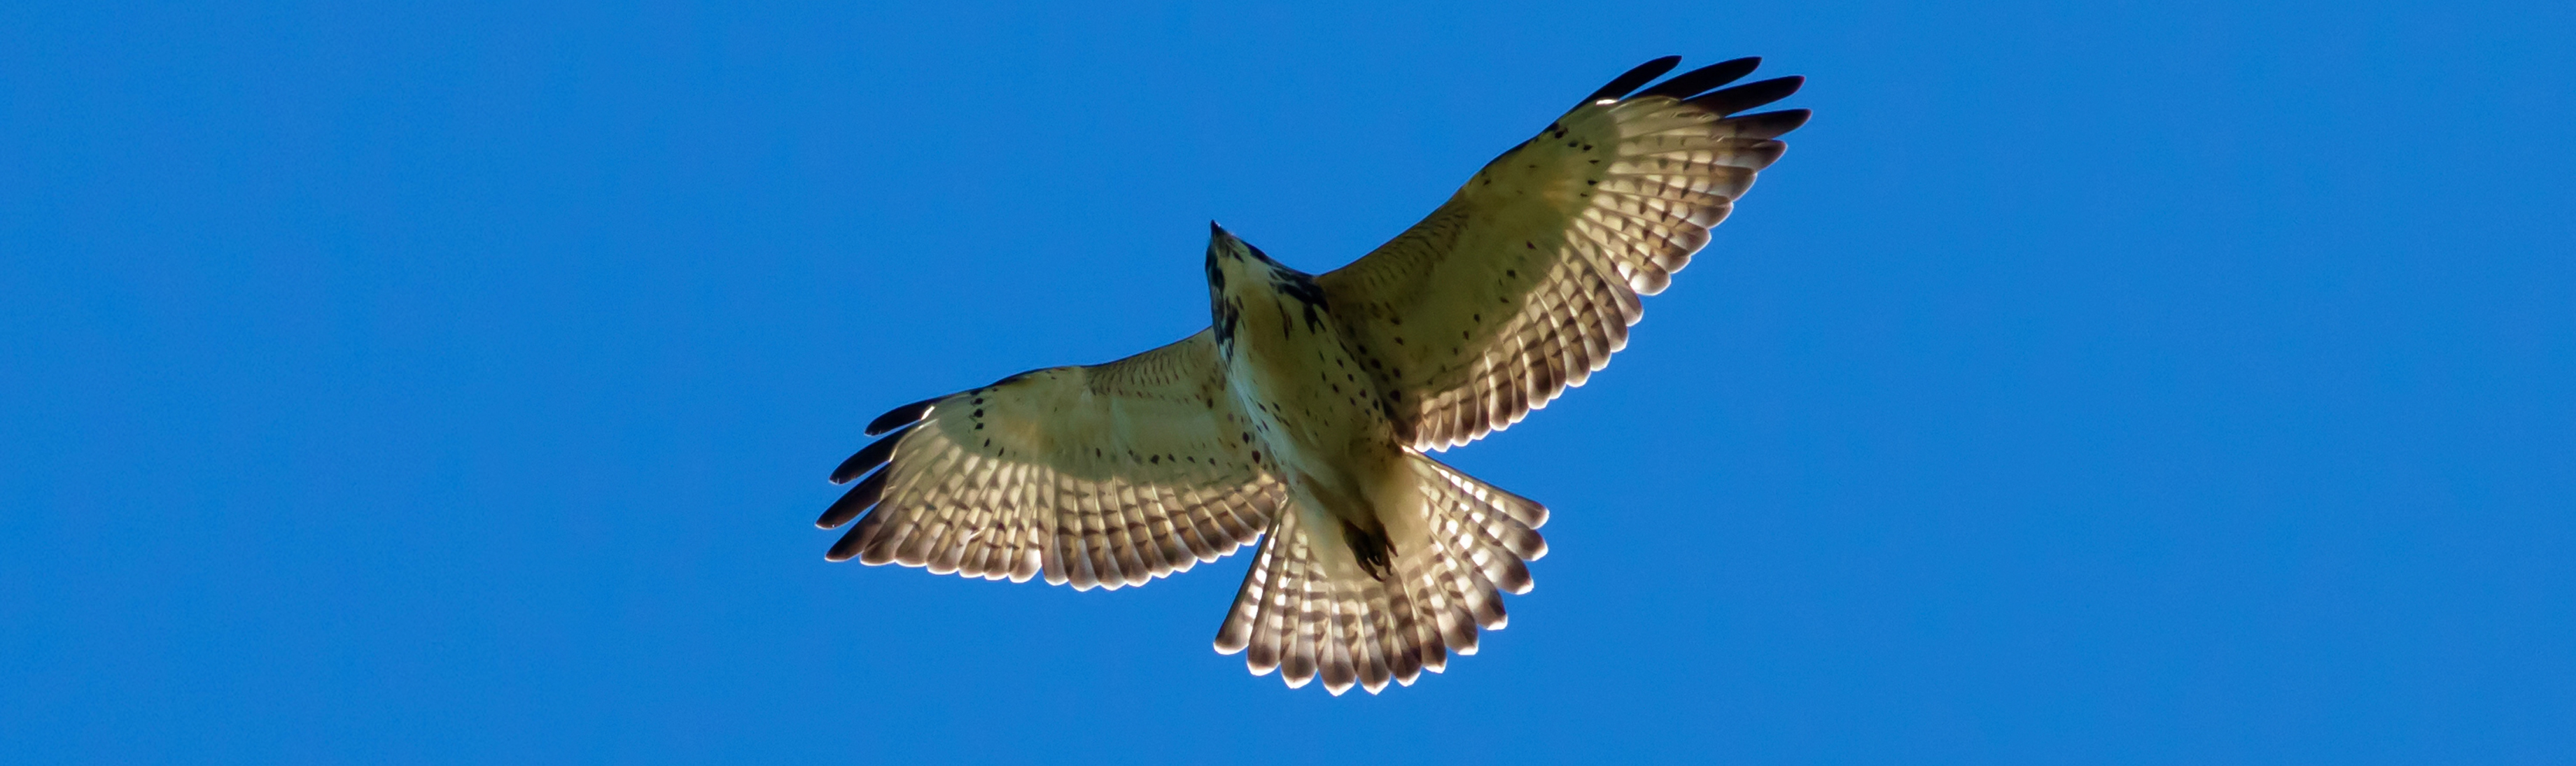 Species Profile: Broad-Winged Hawk (Buteo platypterus) | Rainforest ...